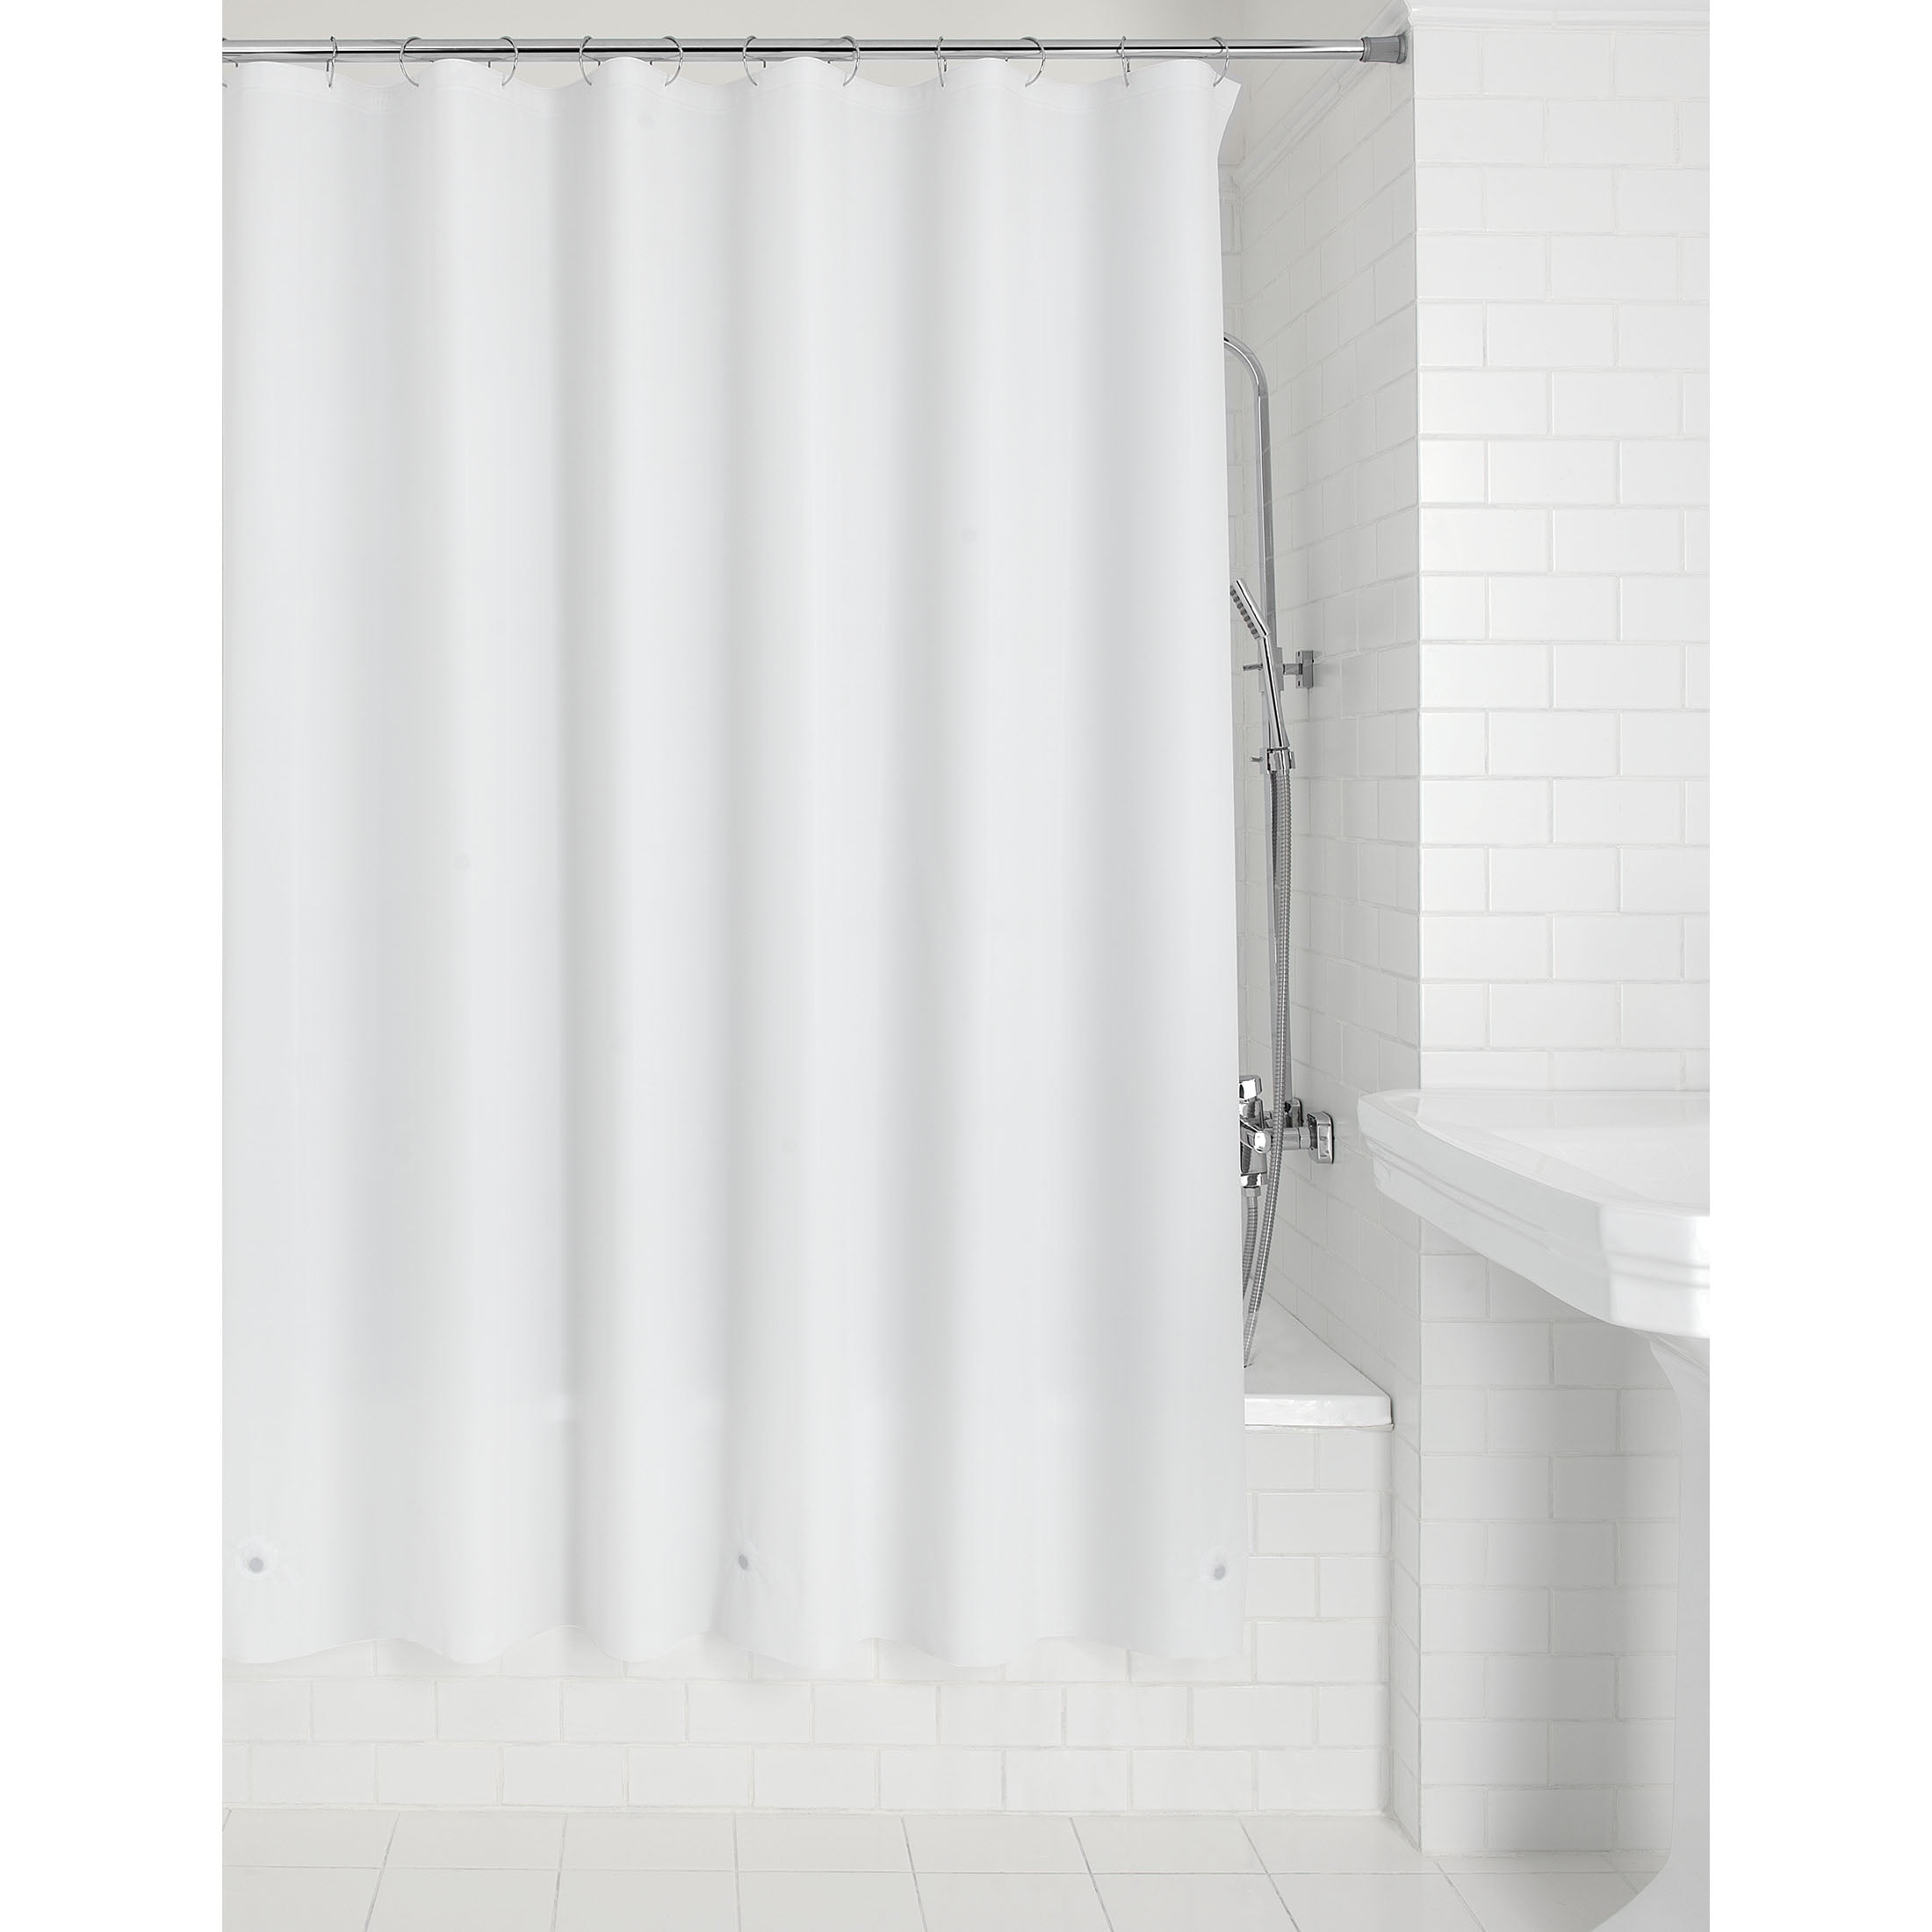 72x72'' Motorcycle Bathroom Waterproof Fabric Shower Curtain 12 Hooks 077 